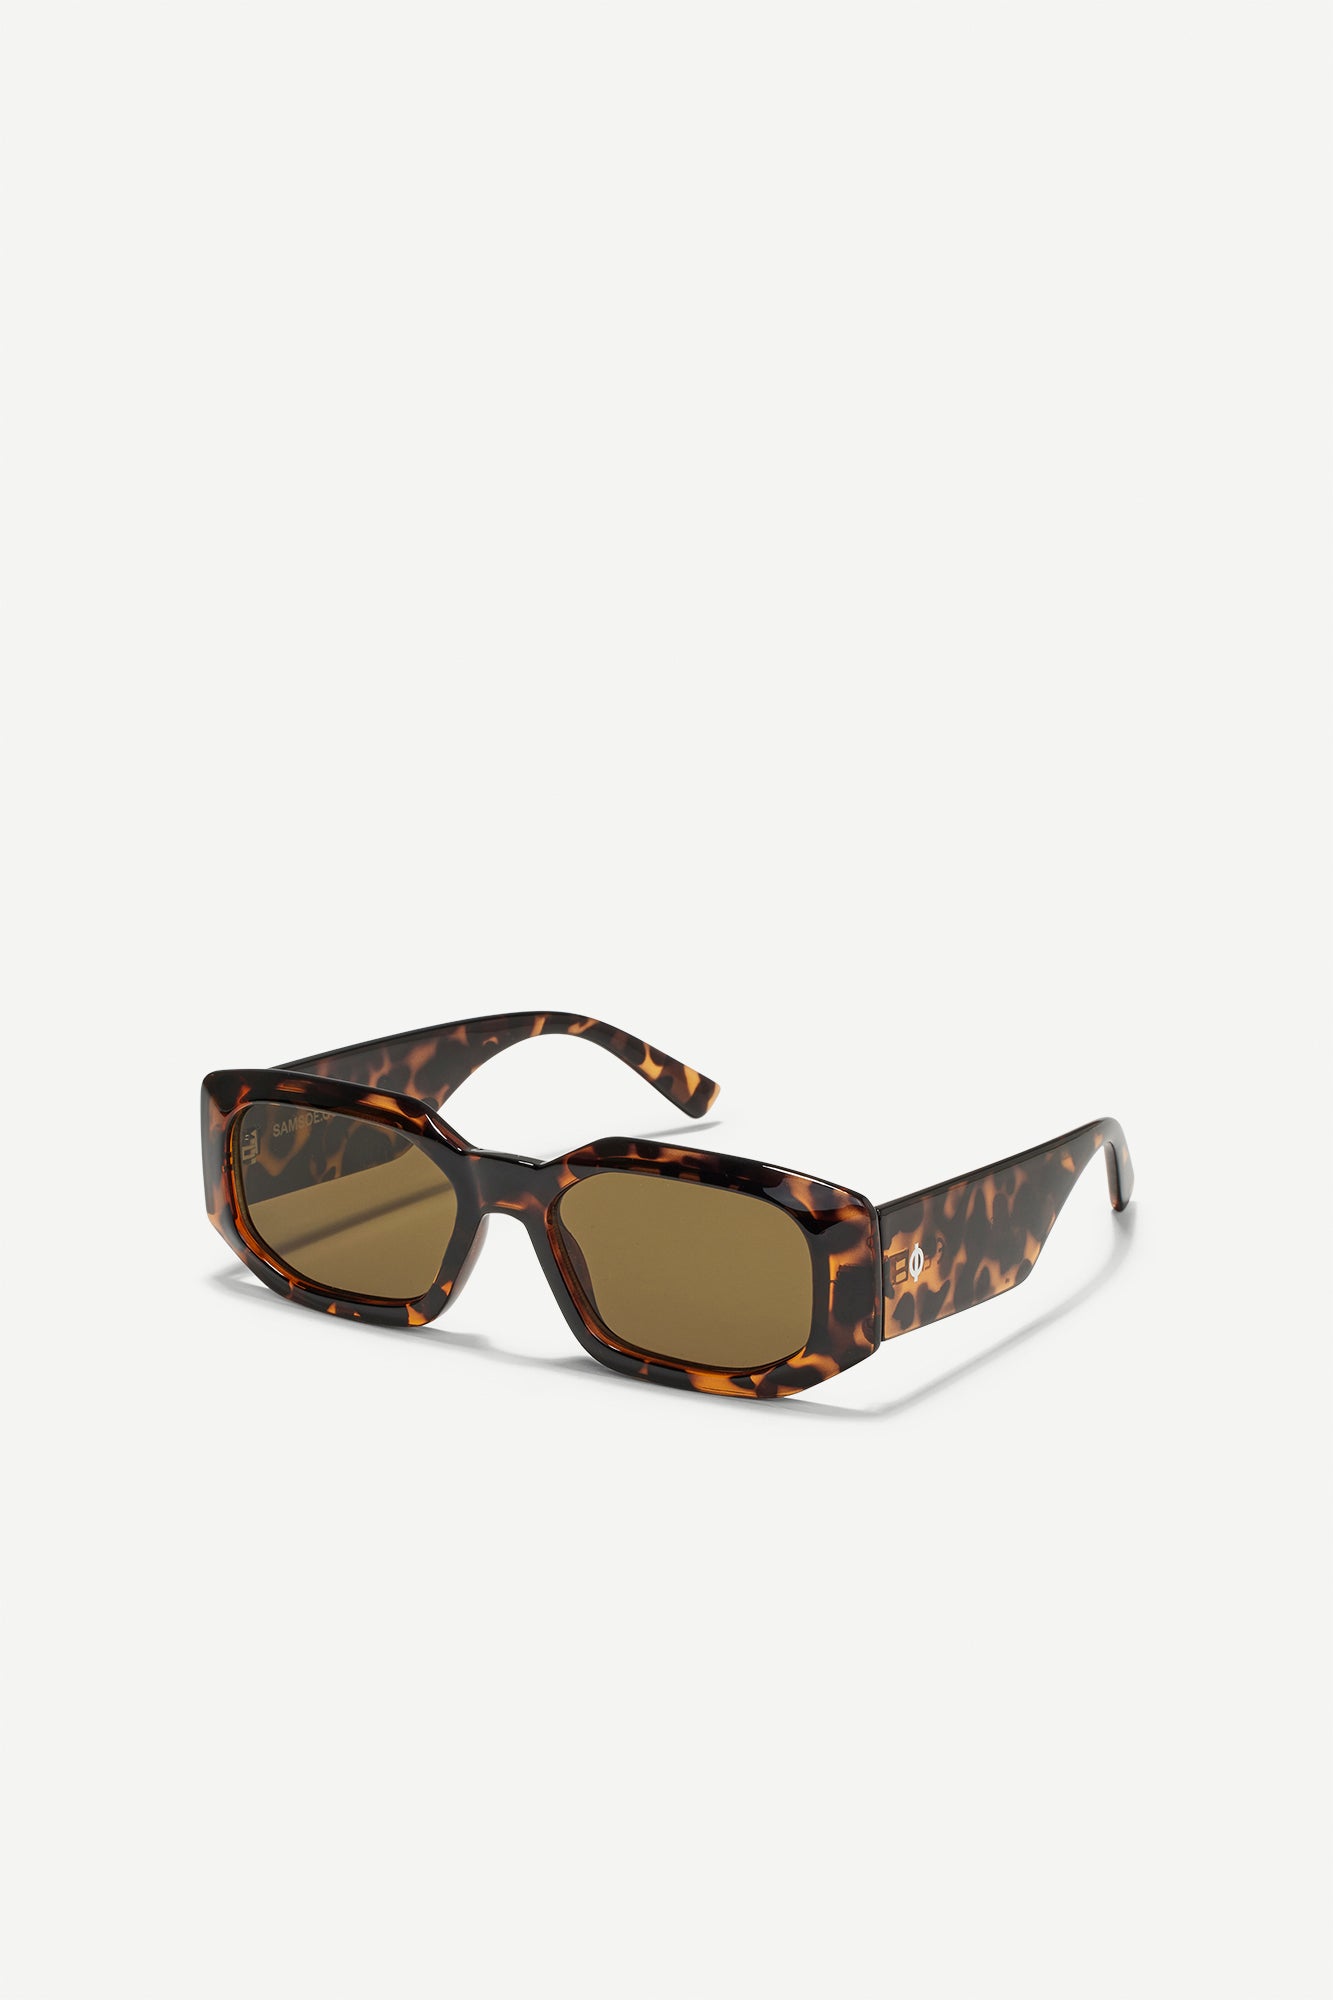 sunglasses Milo tortoise brown